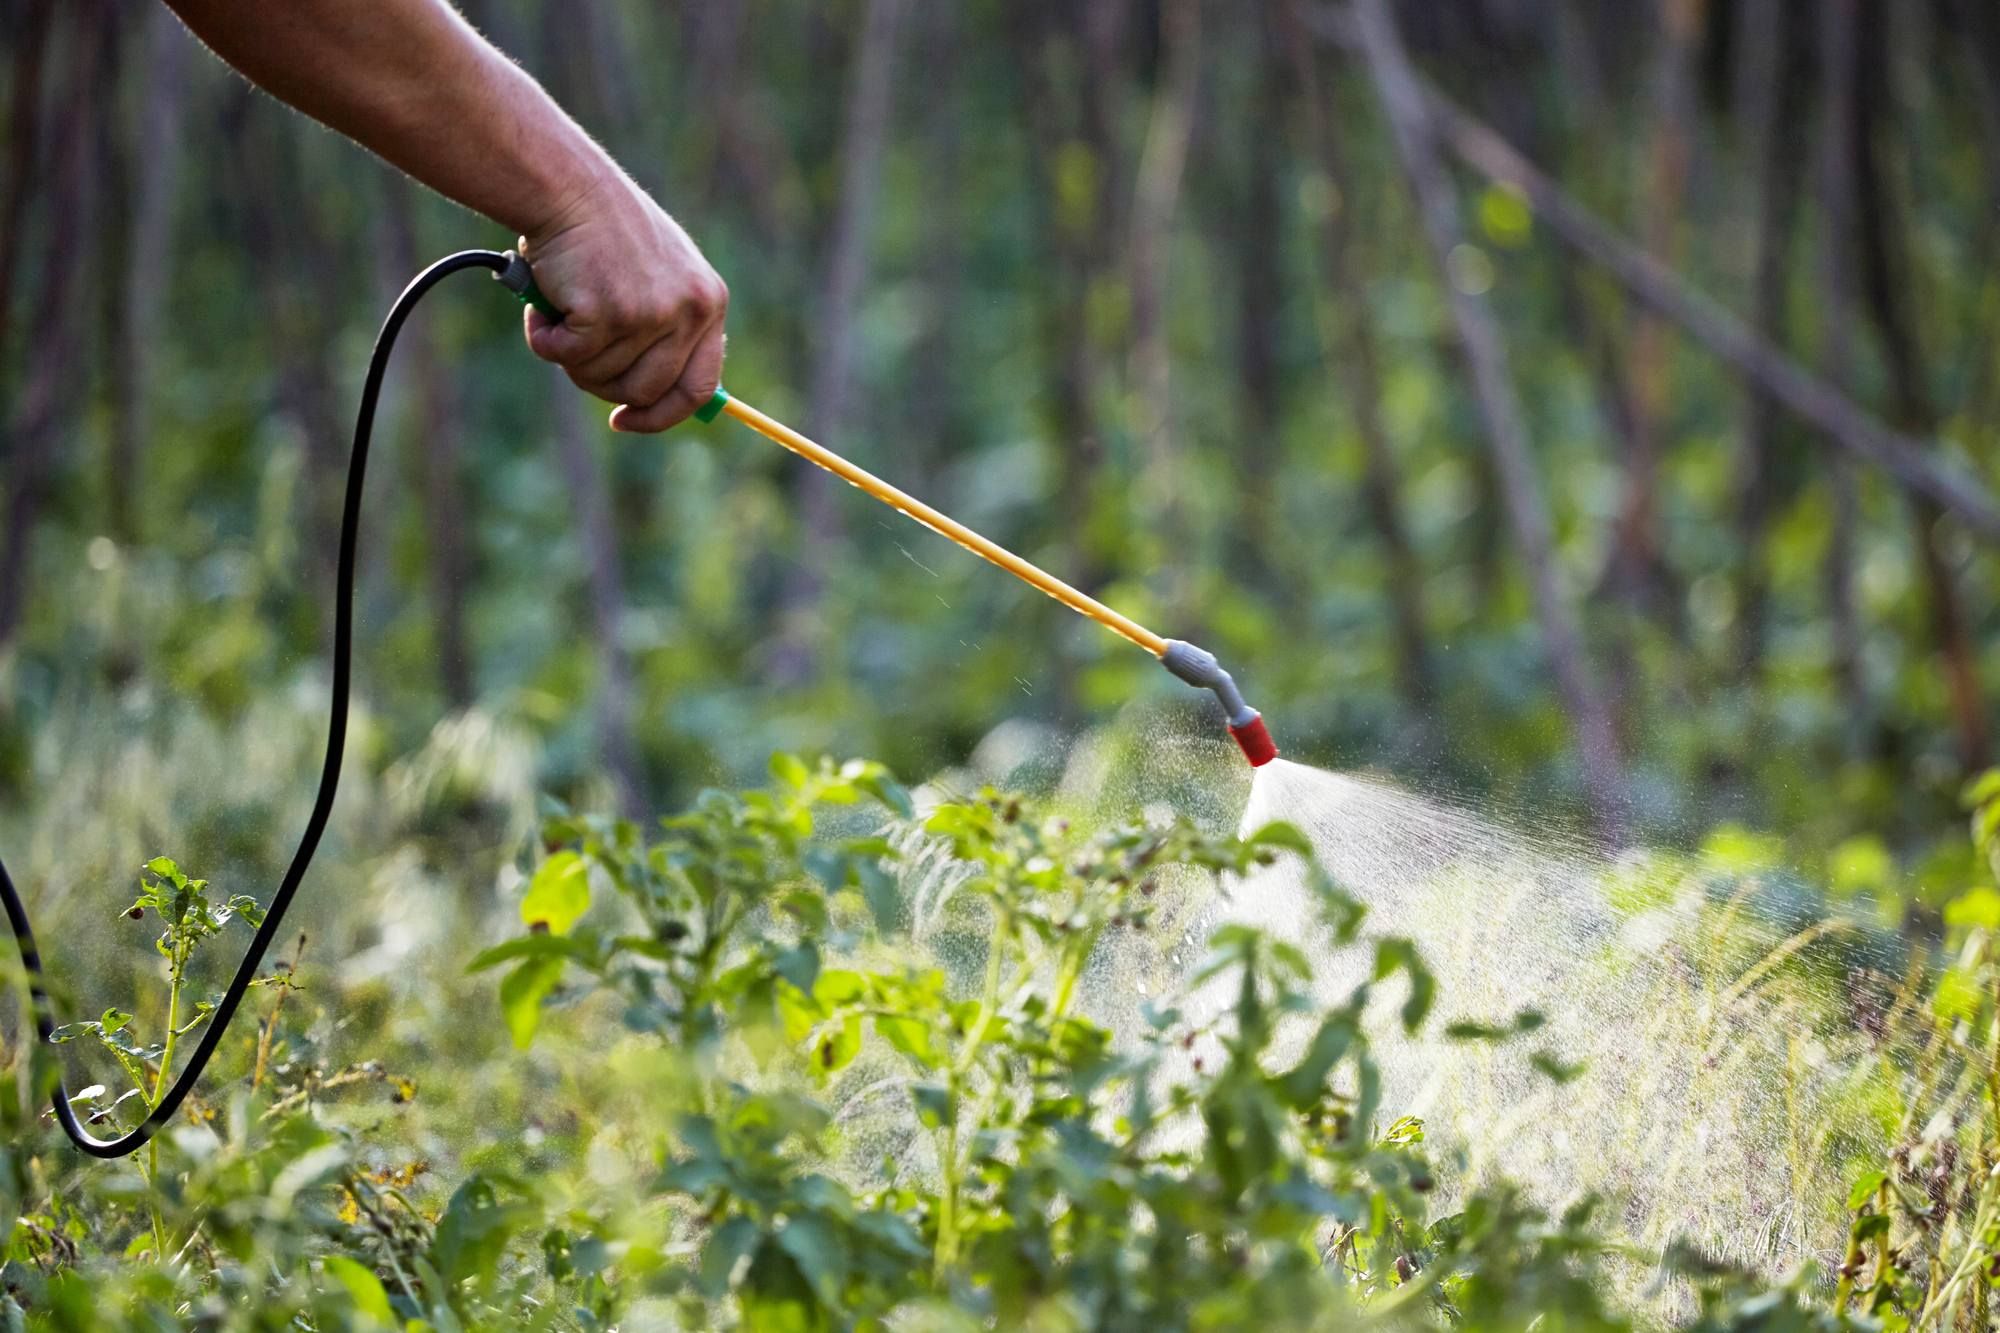 man spraying weeds with Roundup